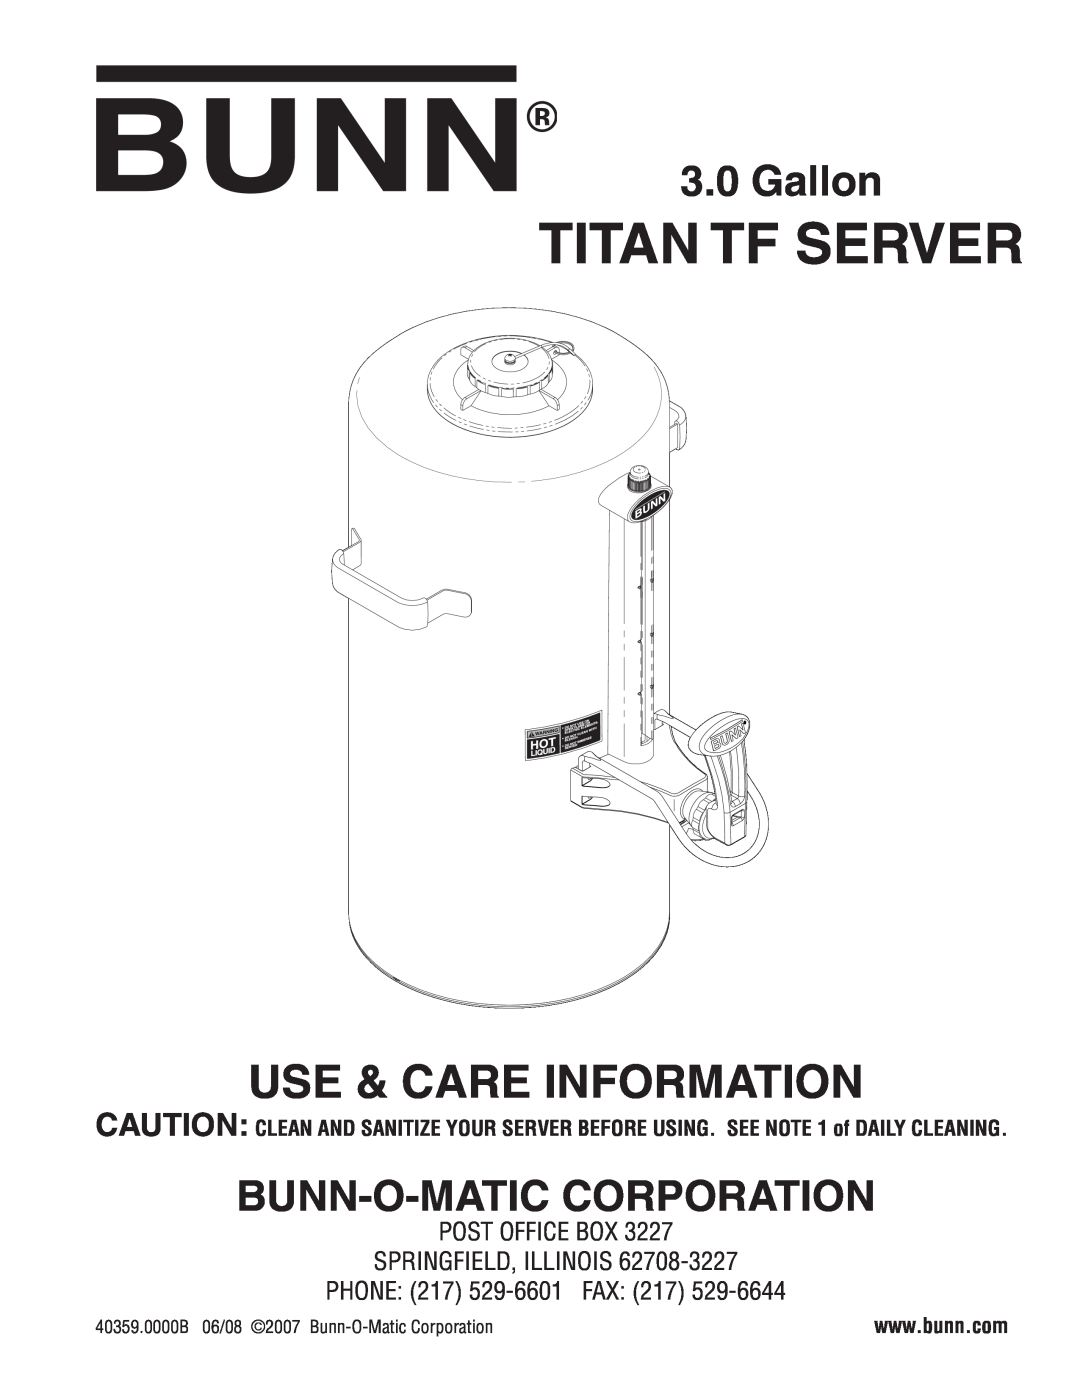 Bunn TITAN TF manual Titan Tf Server, Use & Care Information, Gallon, Bunn-O-Matic Corporation 